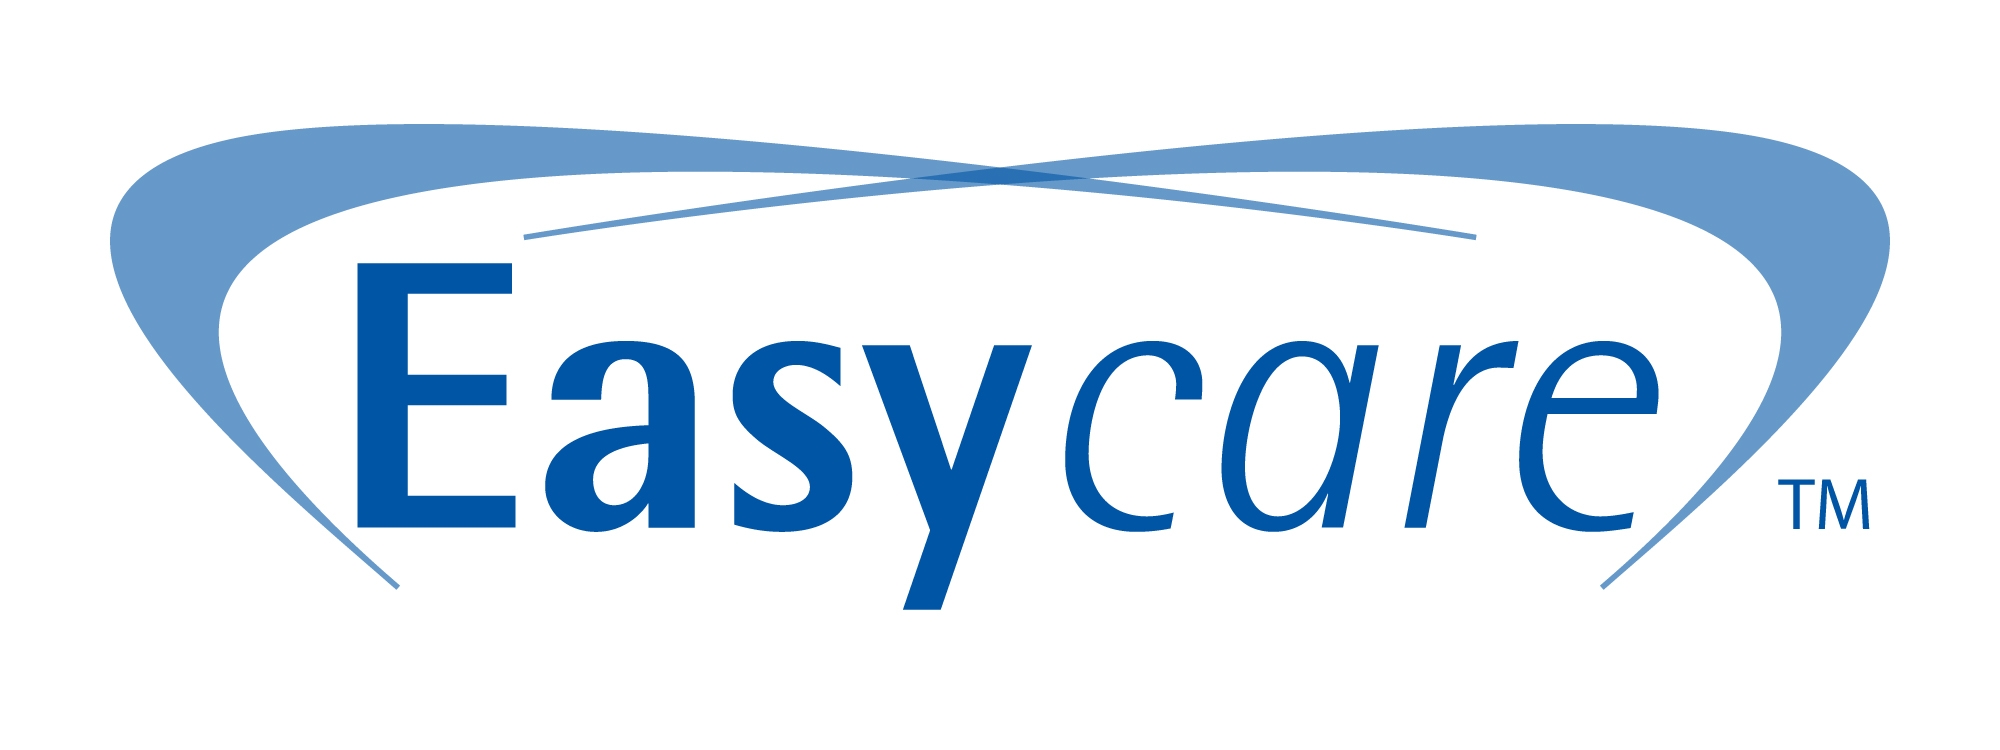 Easycare Logo photo - 1